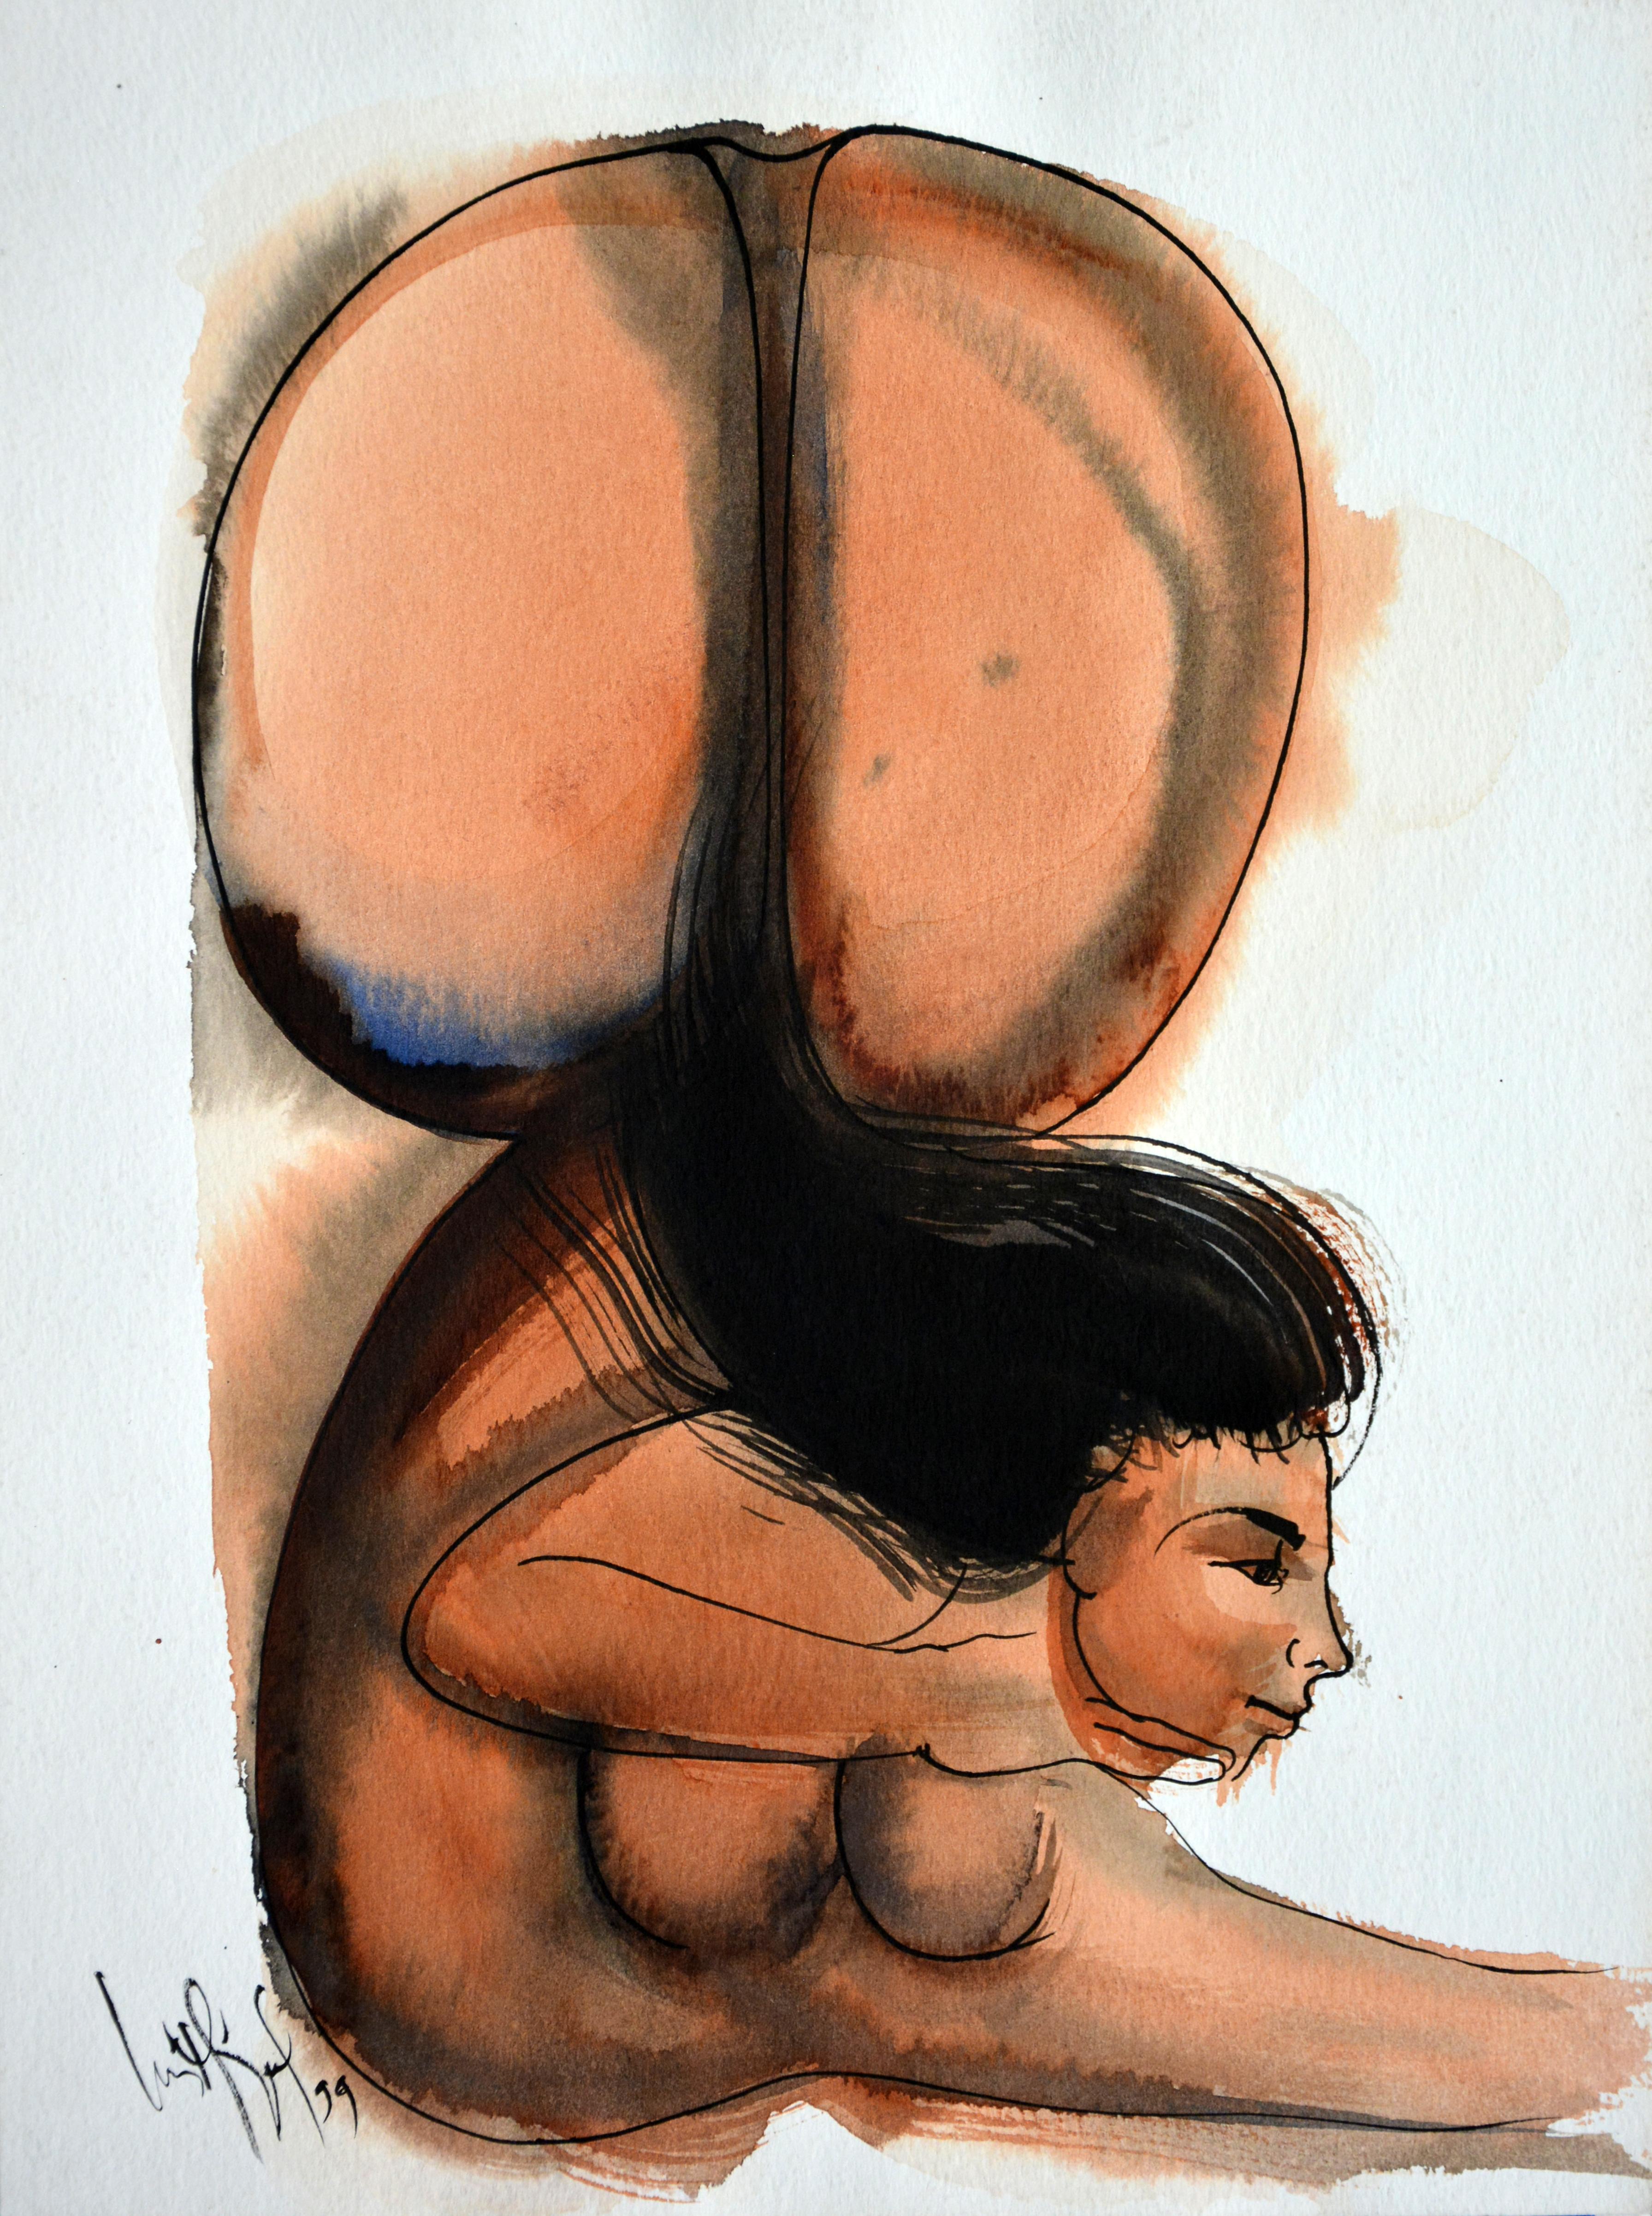 Luis Miguel Valdes  Figurative Art - Luis Miguel Valdes, ¨Caida¨, 1999, Work on paper, 15x11 in